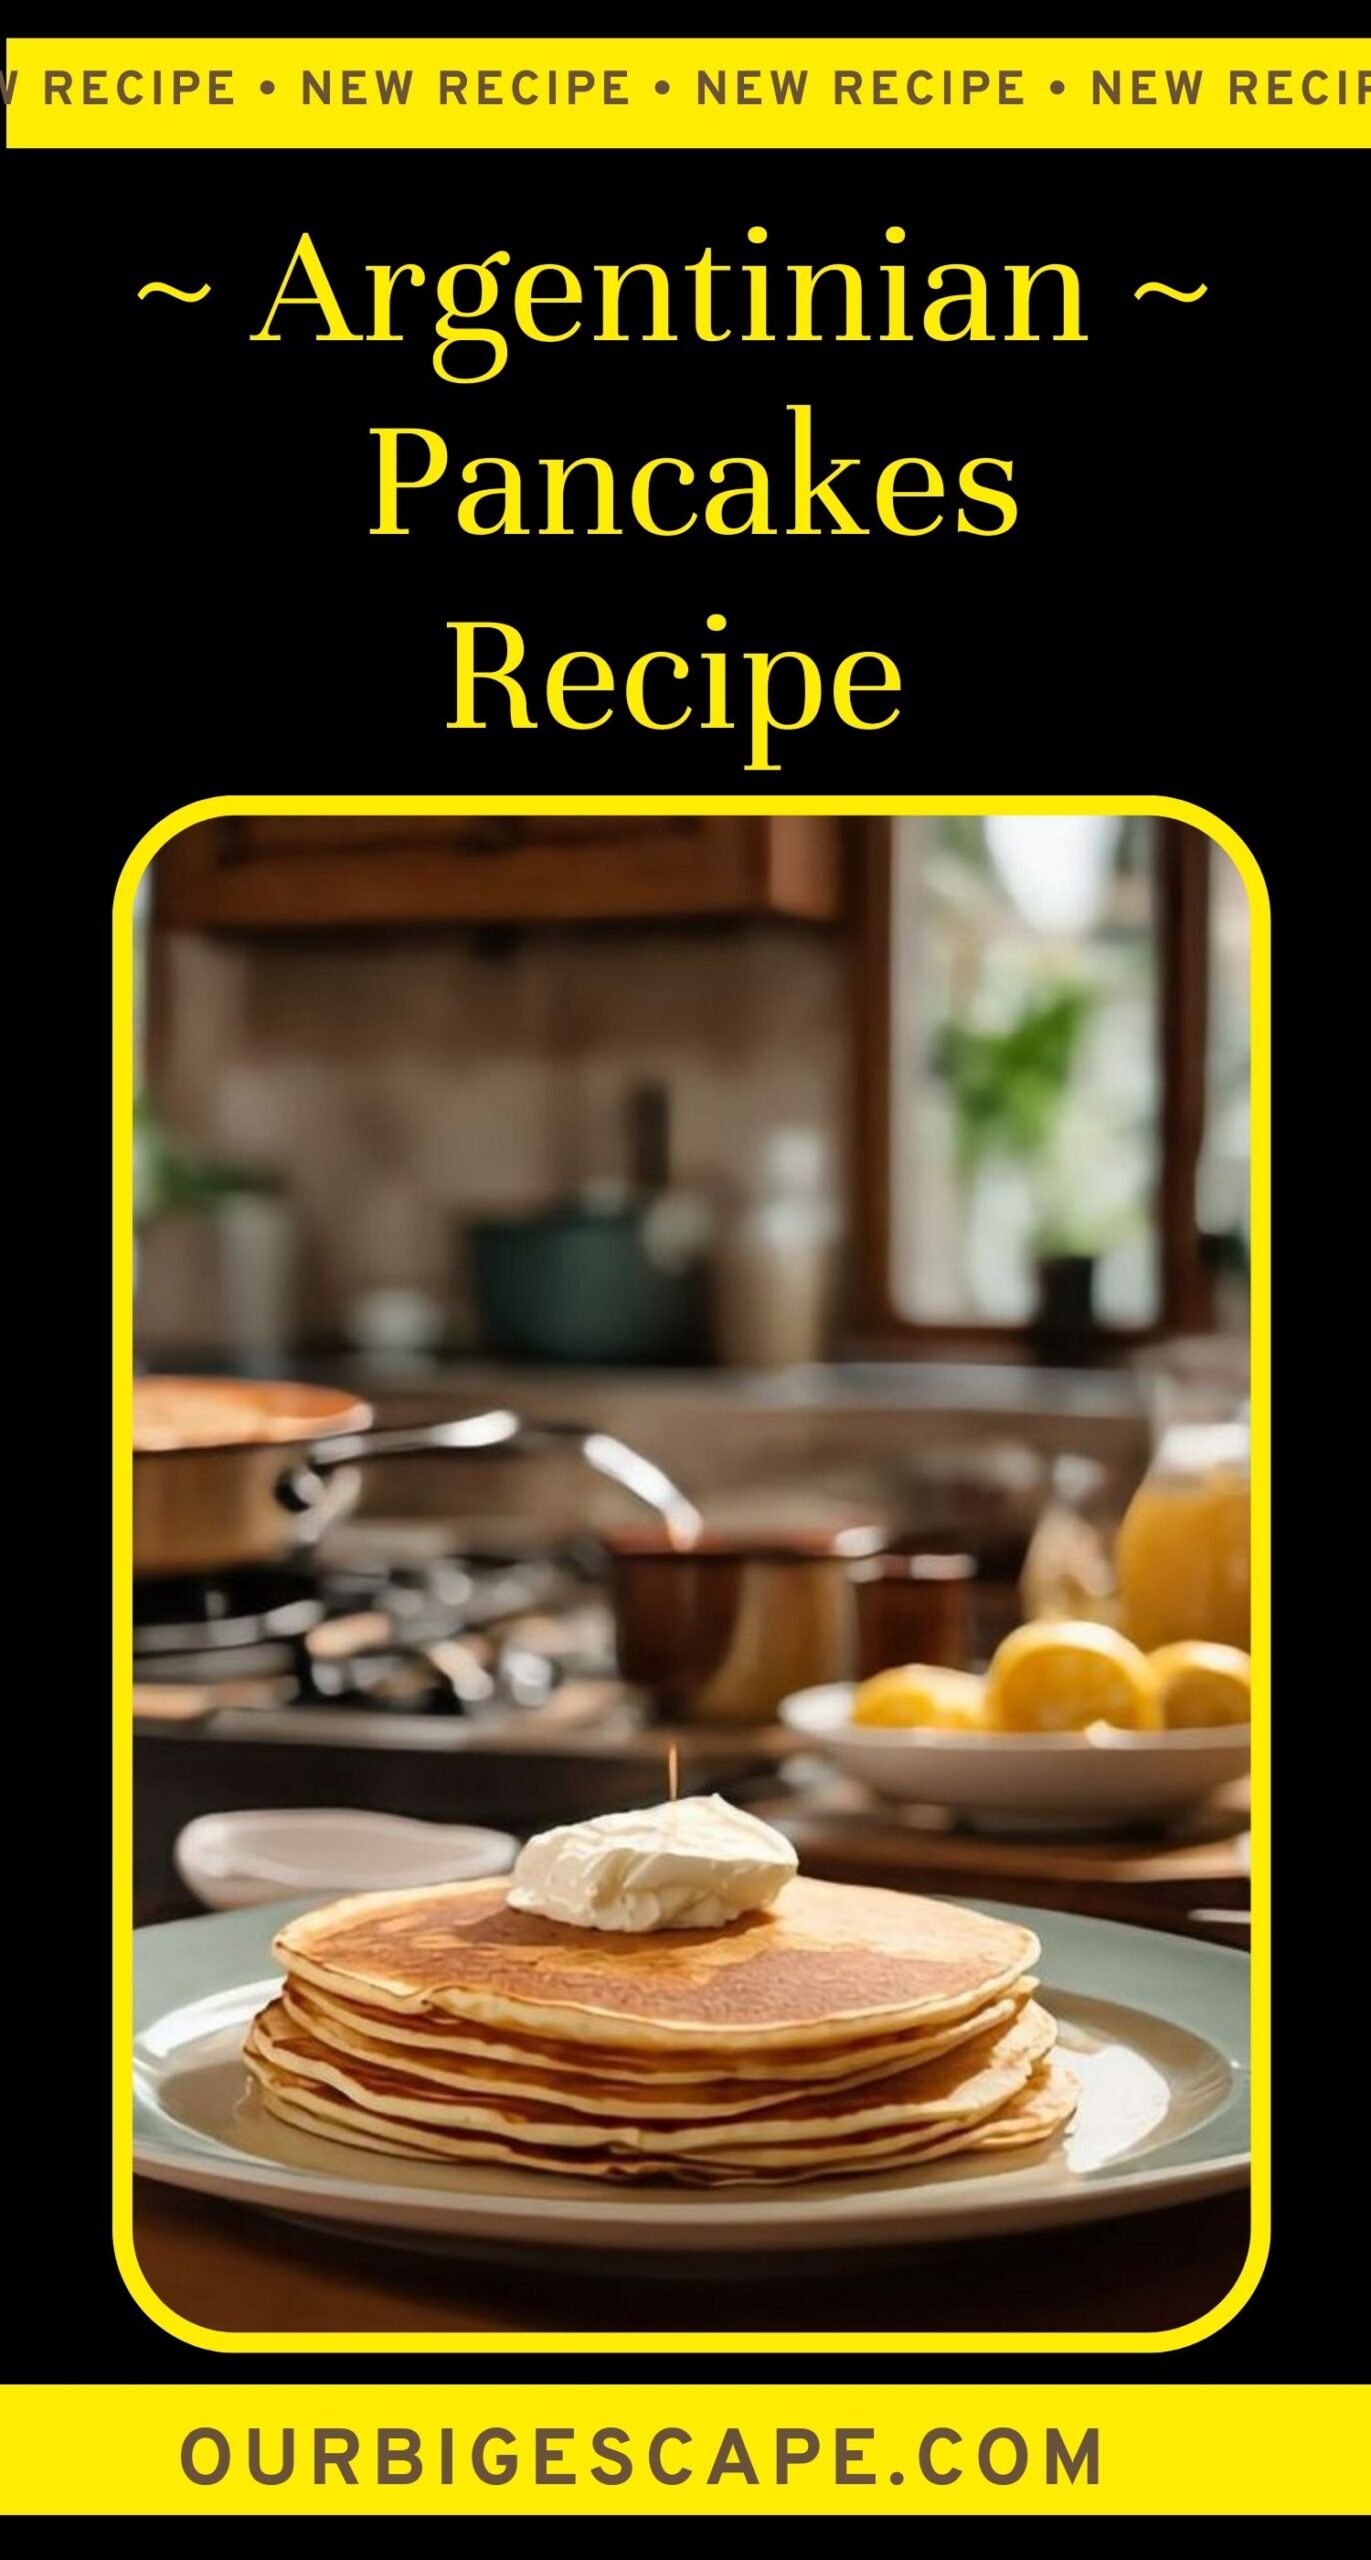 11. Argentinian Pancakes Recipe (1)